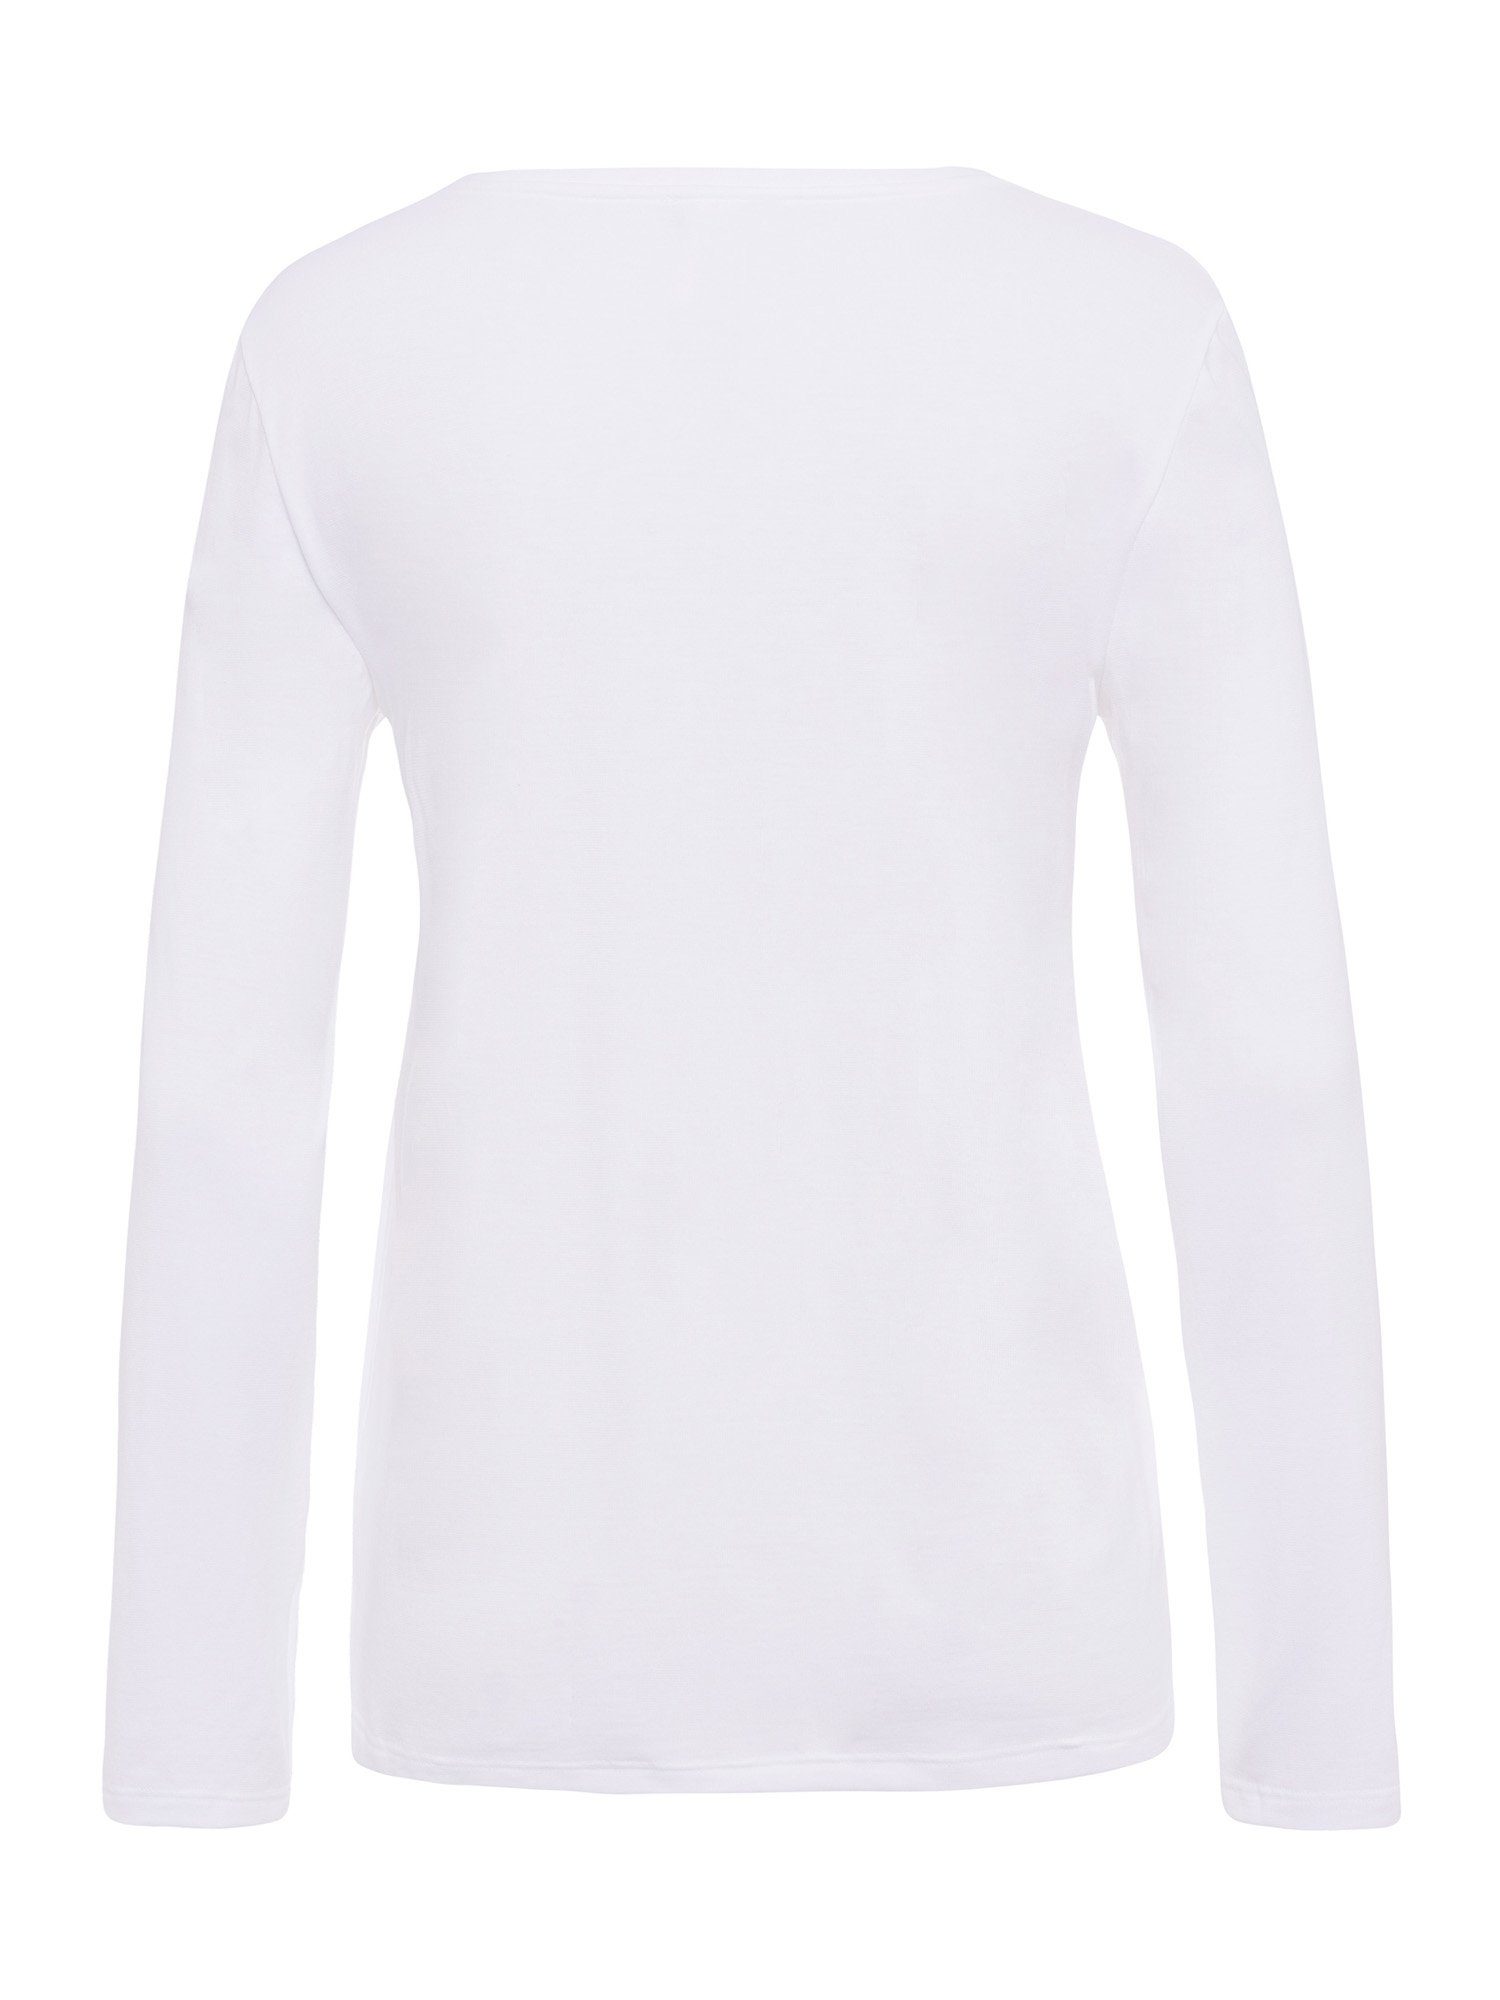 Hanro Pyjamaoberteil & unterhemd Lounge white shirt langarm Sleep